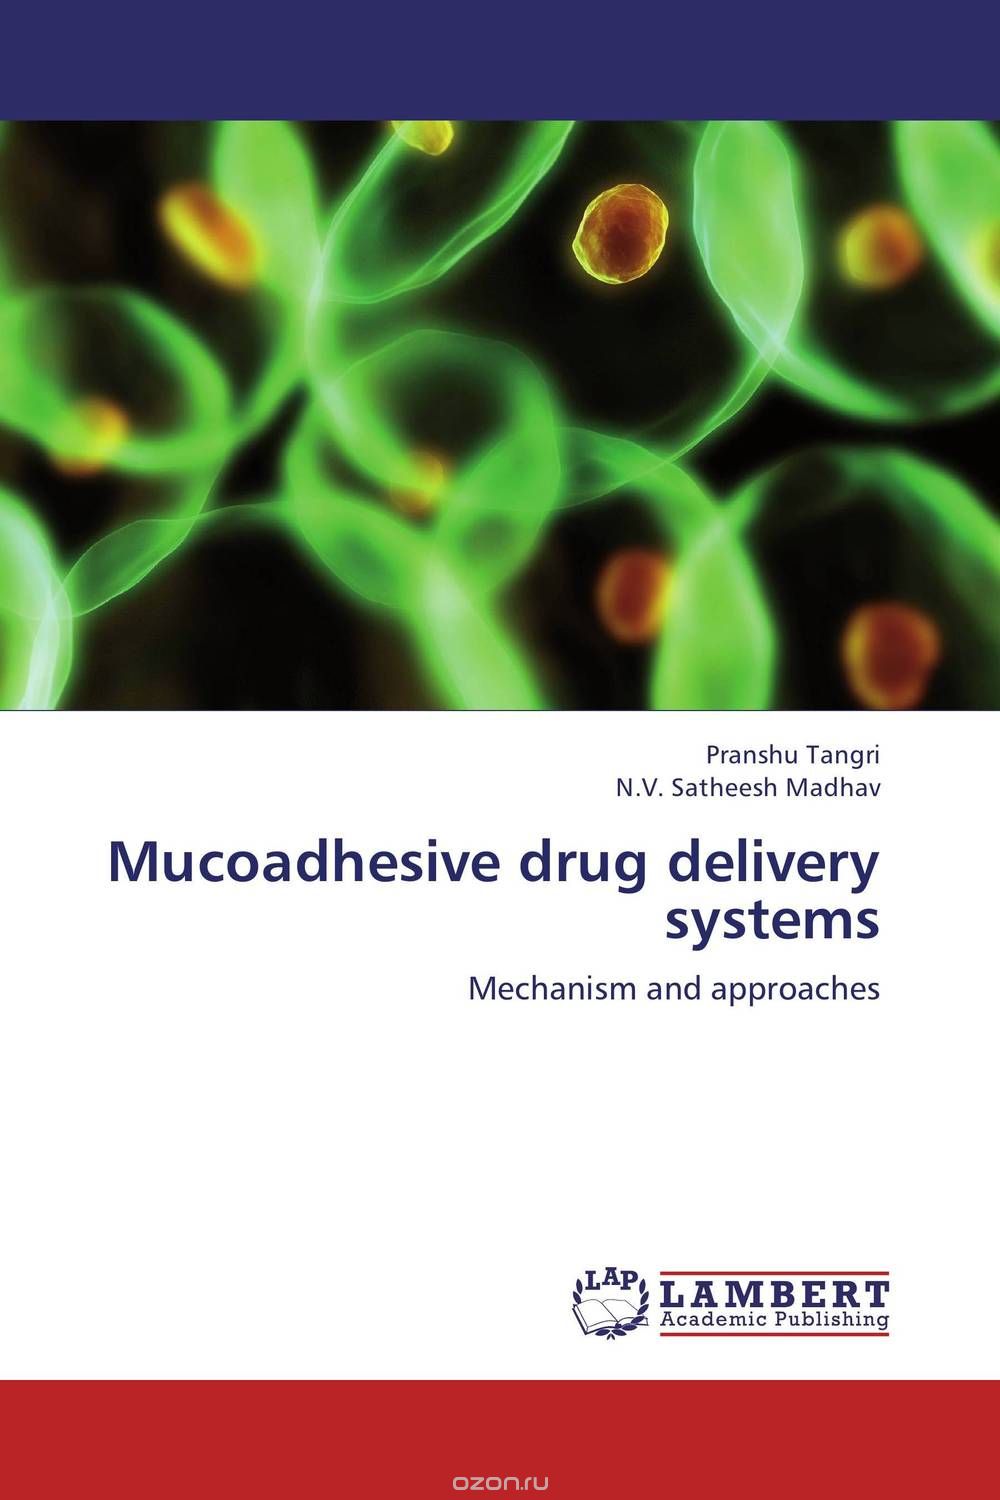 Скачать книгу "Mucoadhesive drug delivery systems"